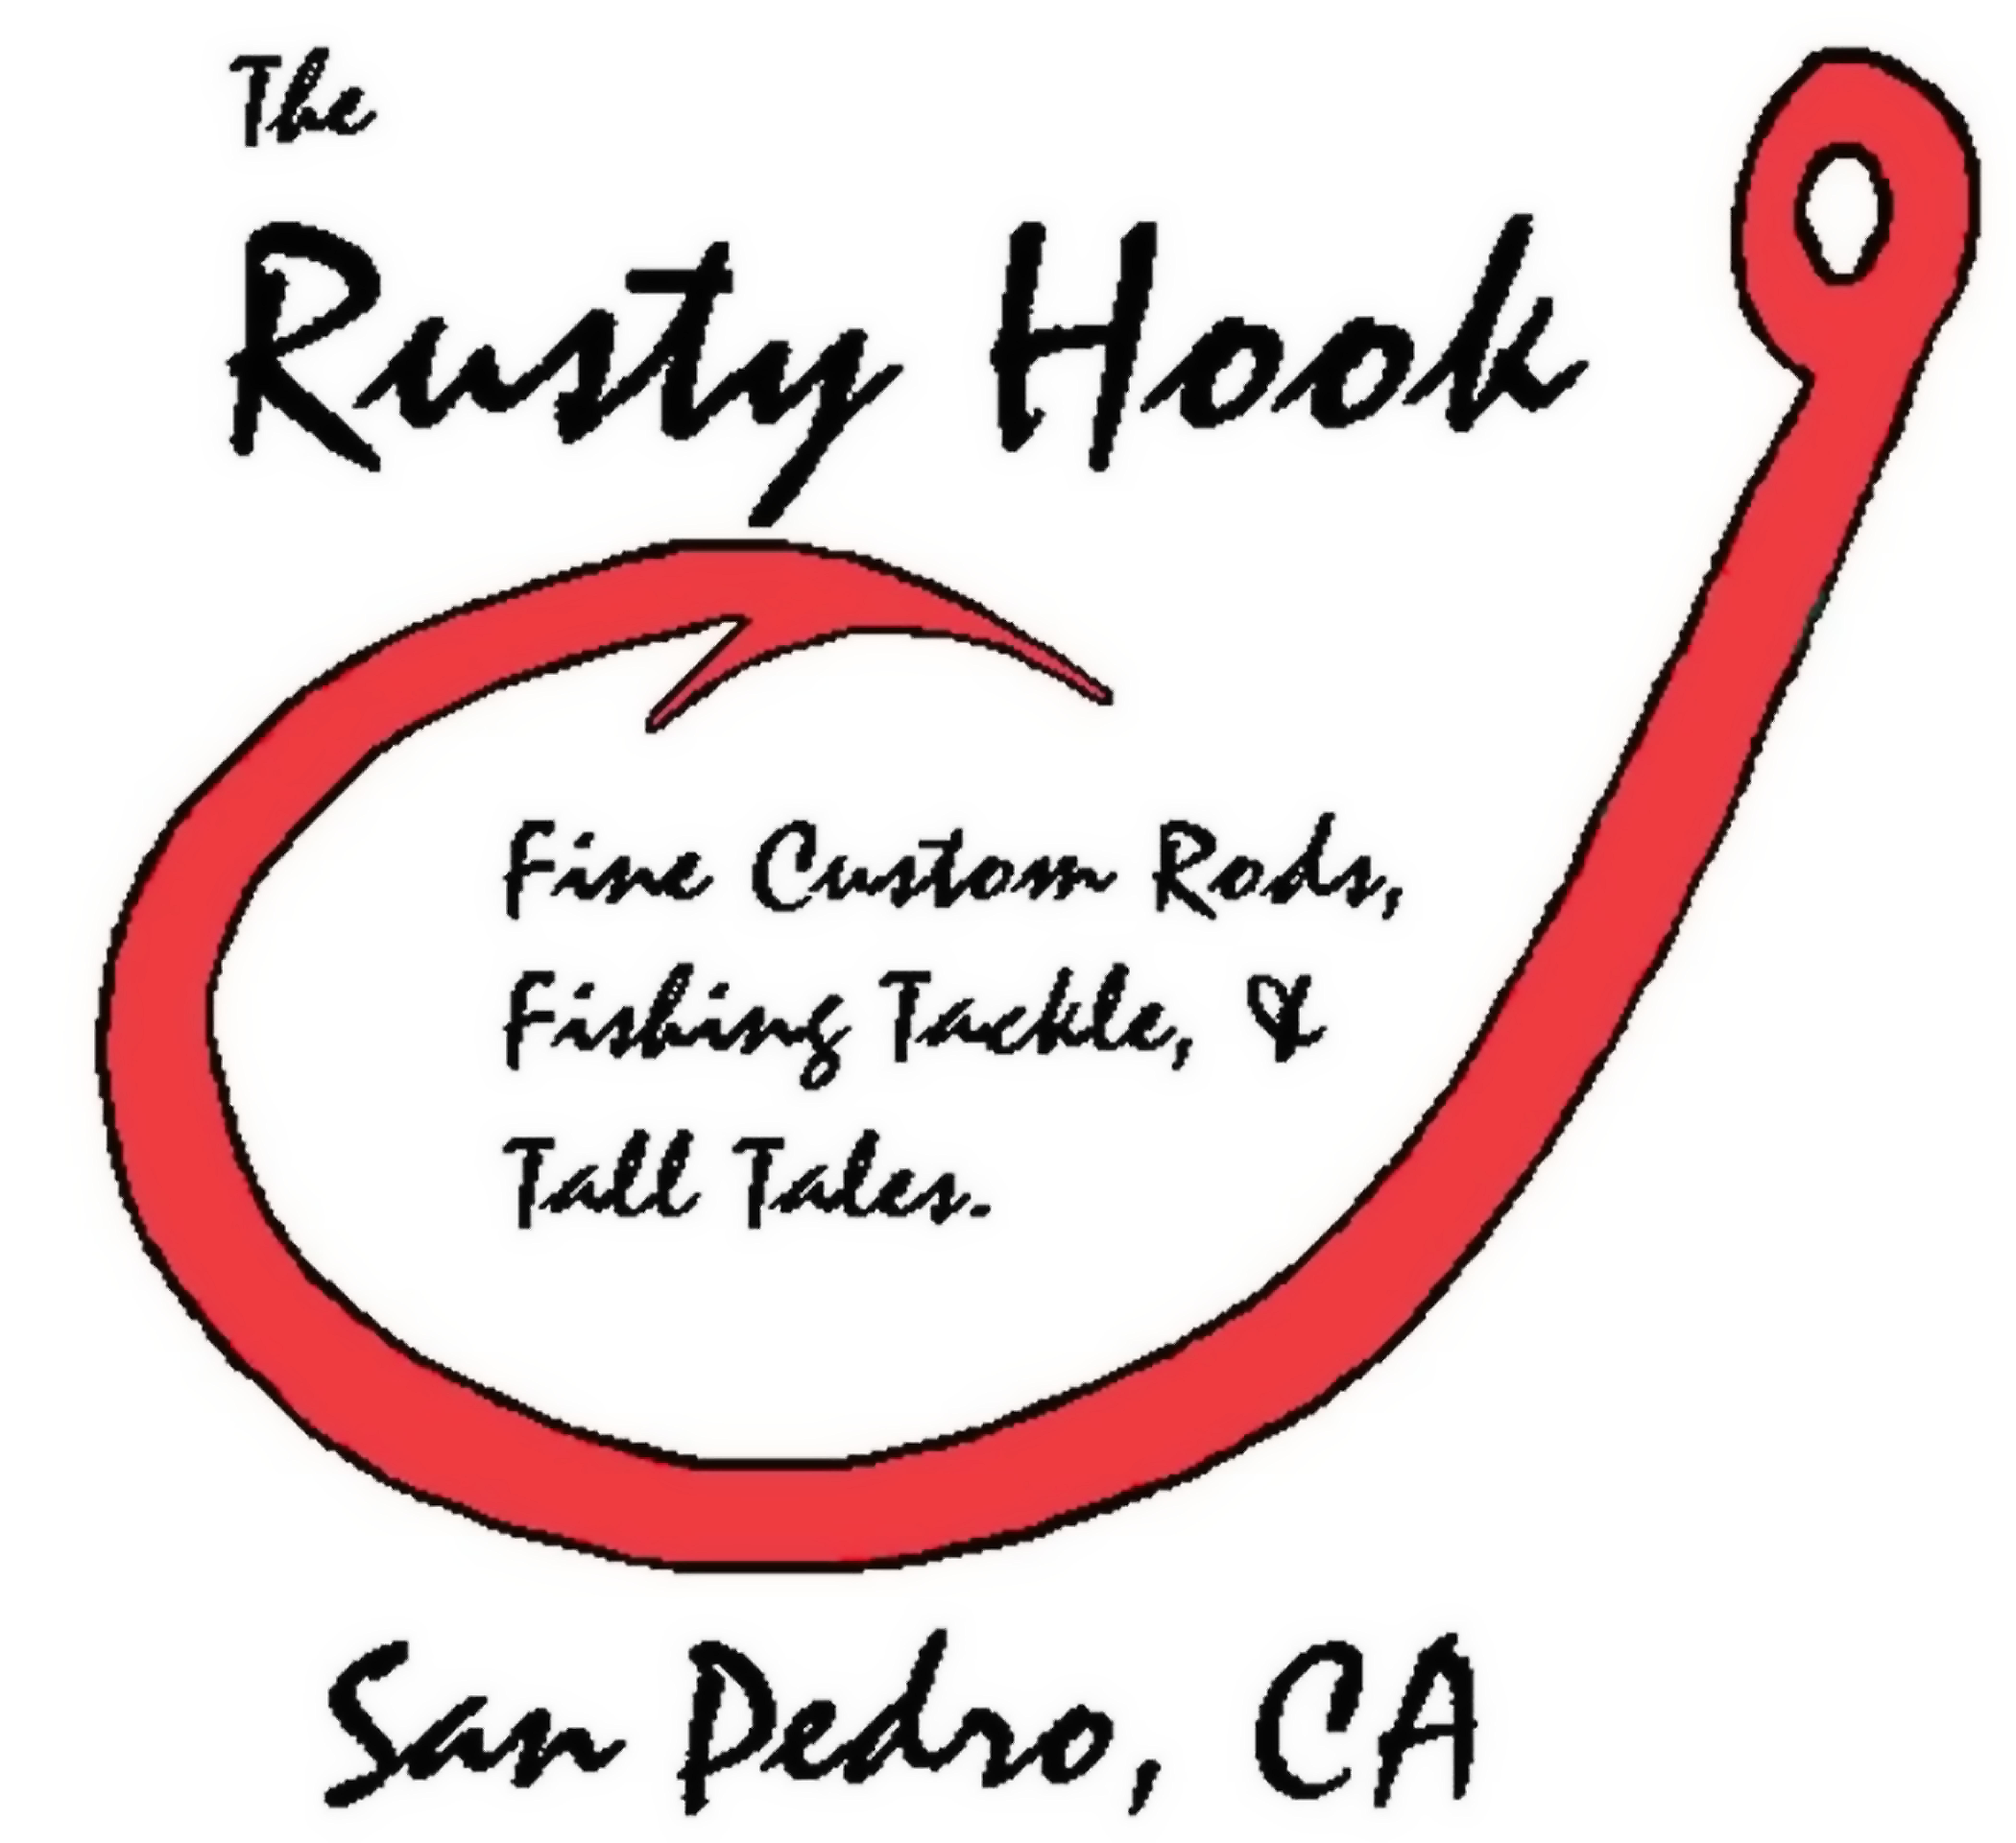 The Rusty Hook